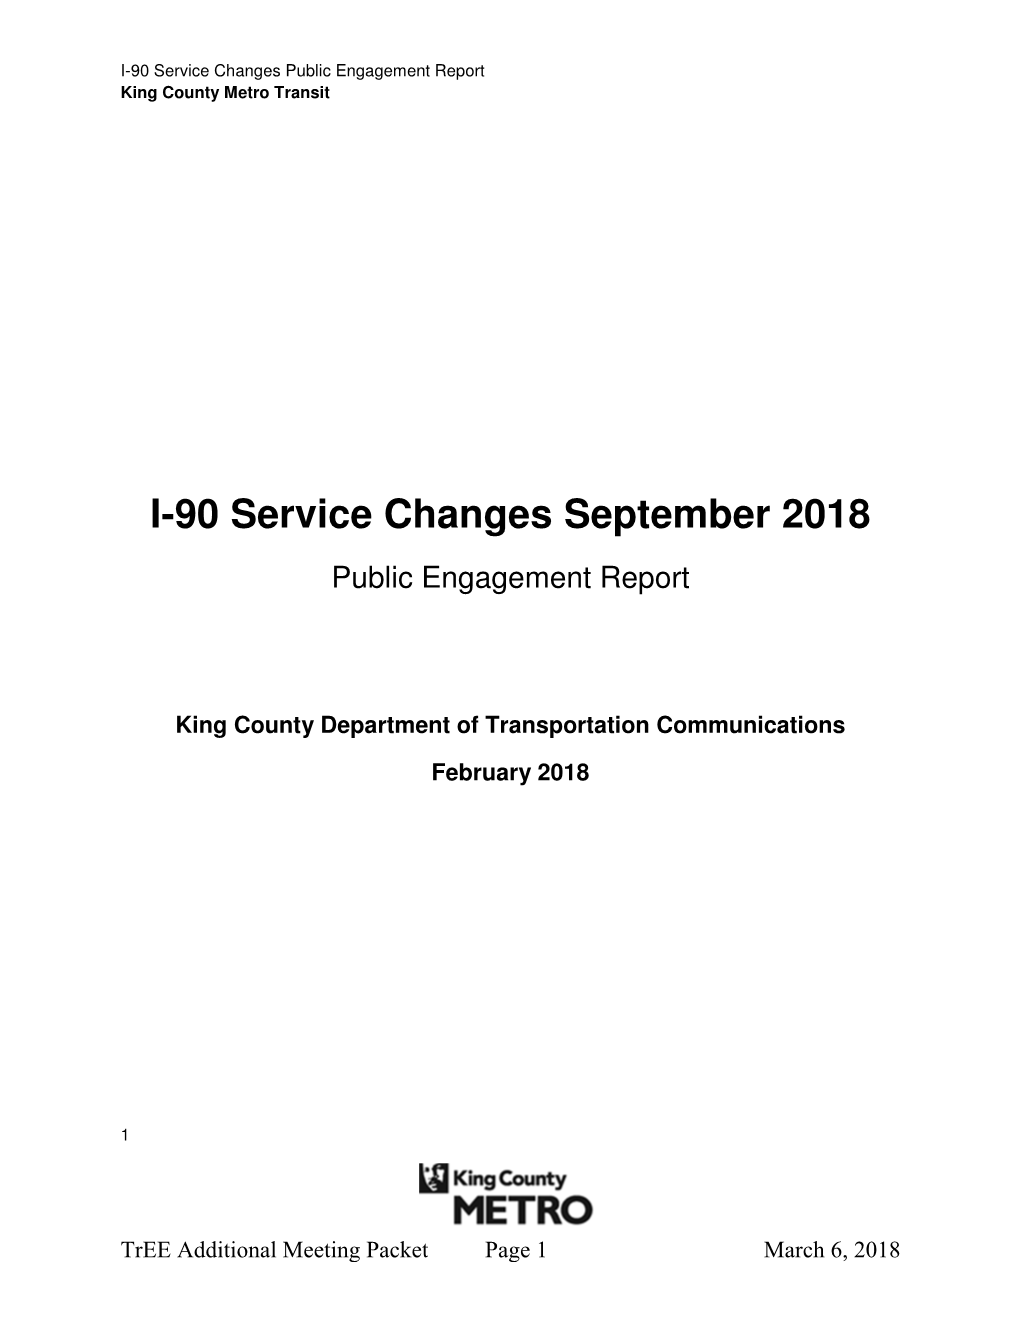 I-90 Service Changes September 2018 Public Engagement Report